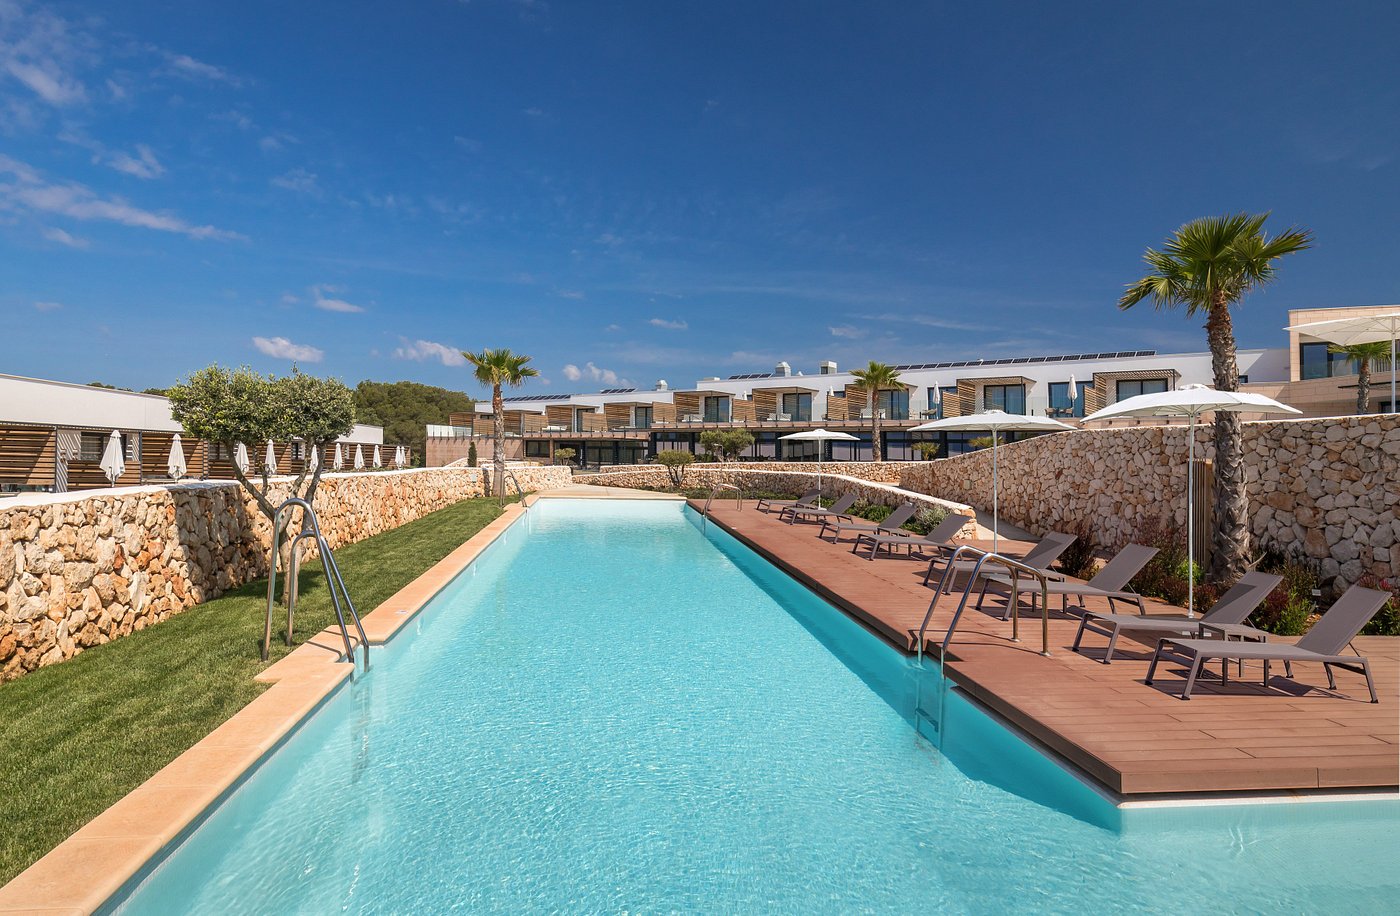 BARCELO NURA - Prices & Hotel Reviews (Spain/Menorca)